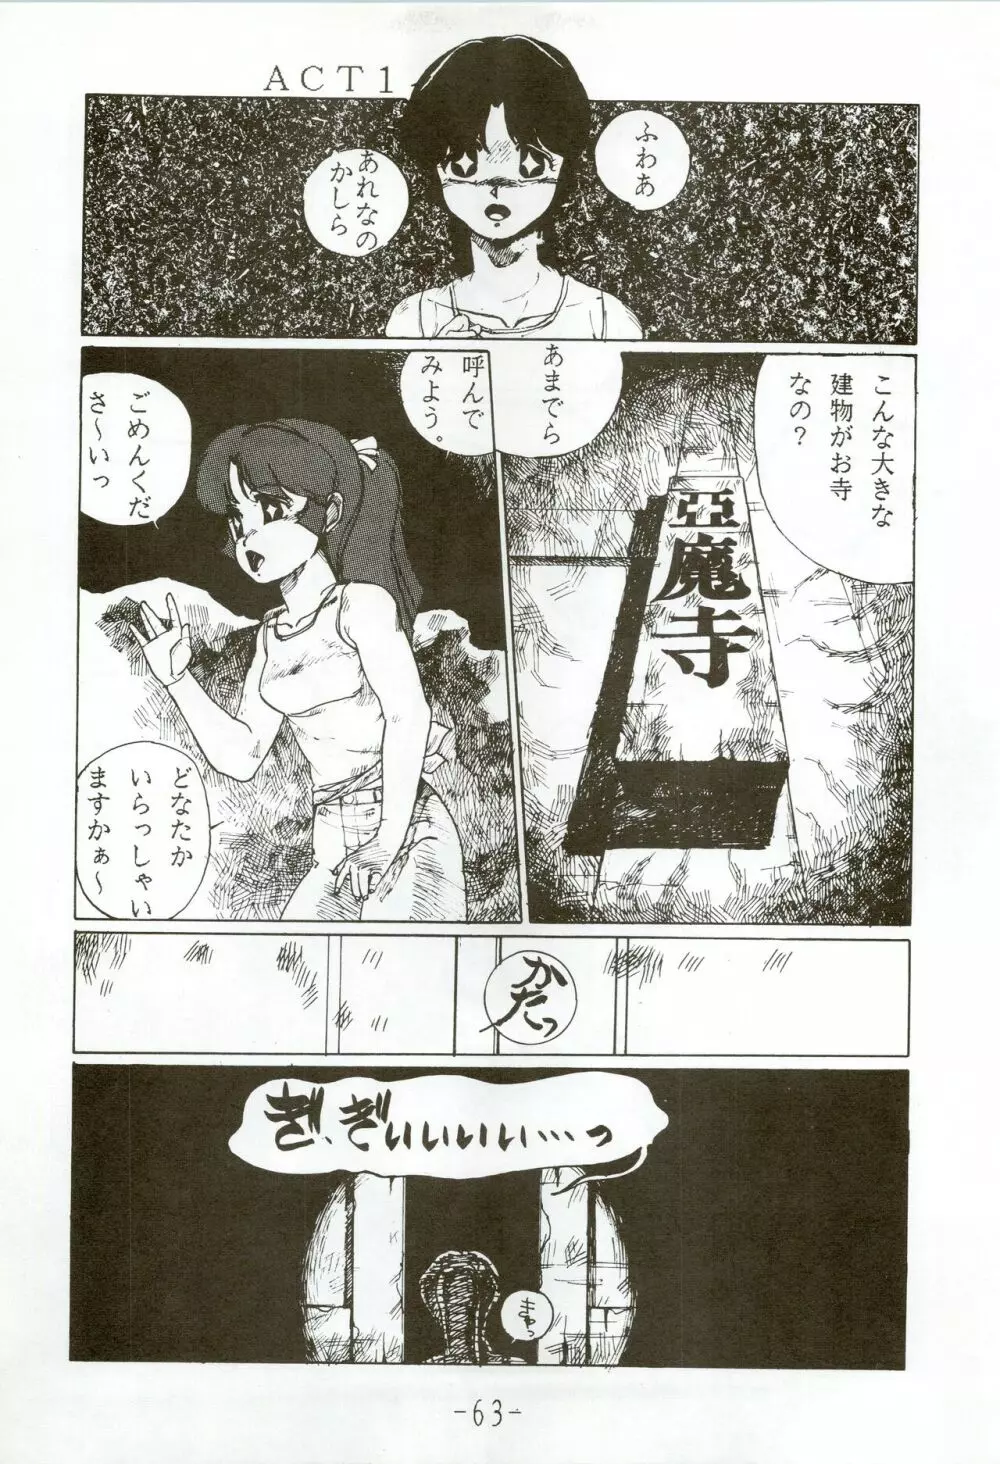 甲冑伝説 - page63